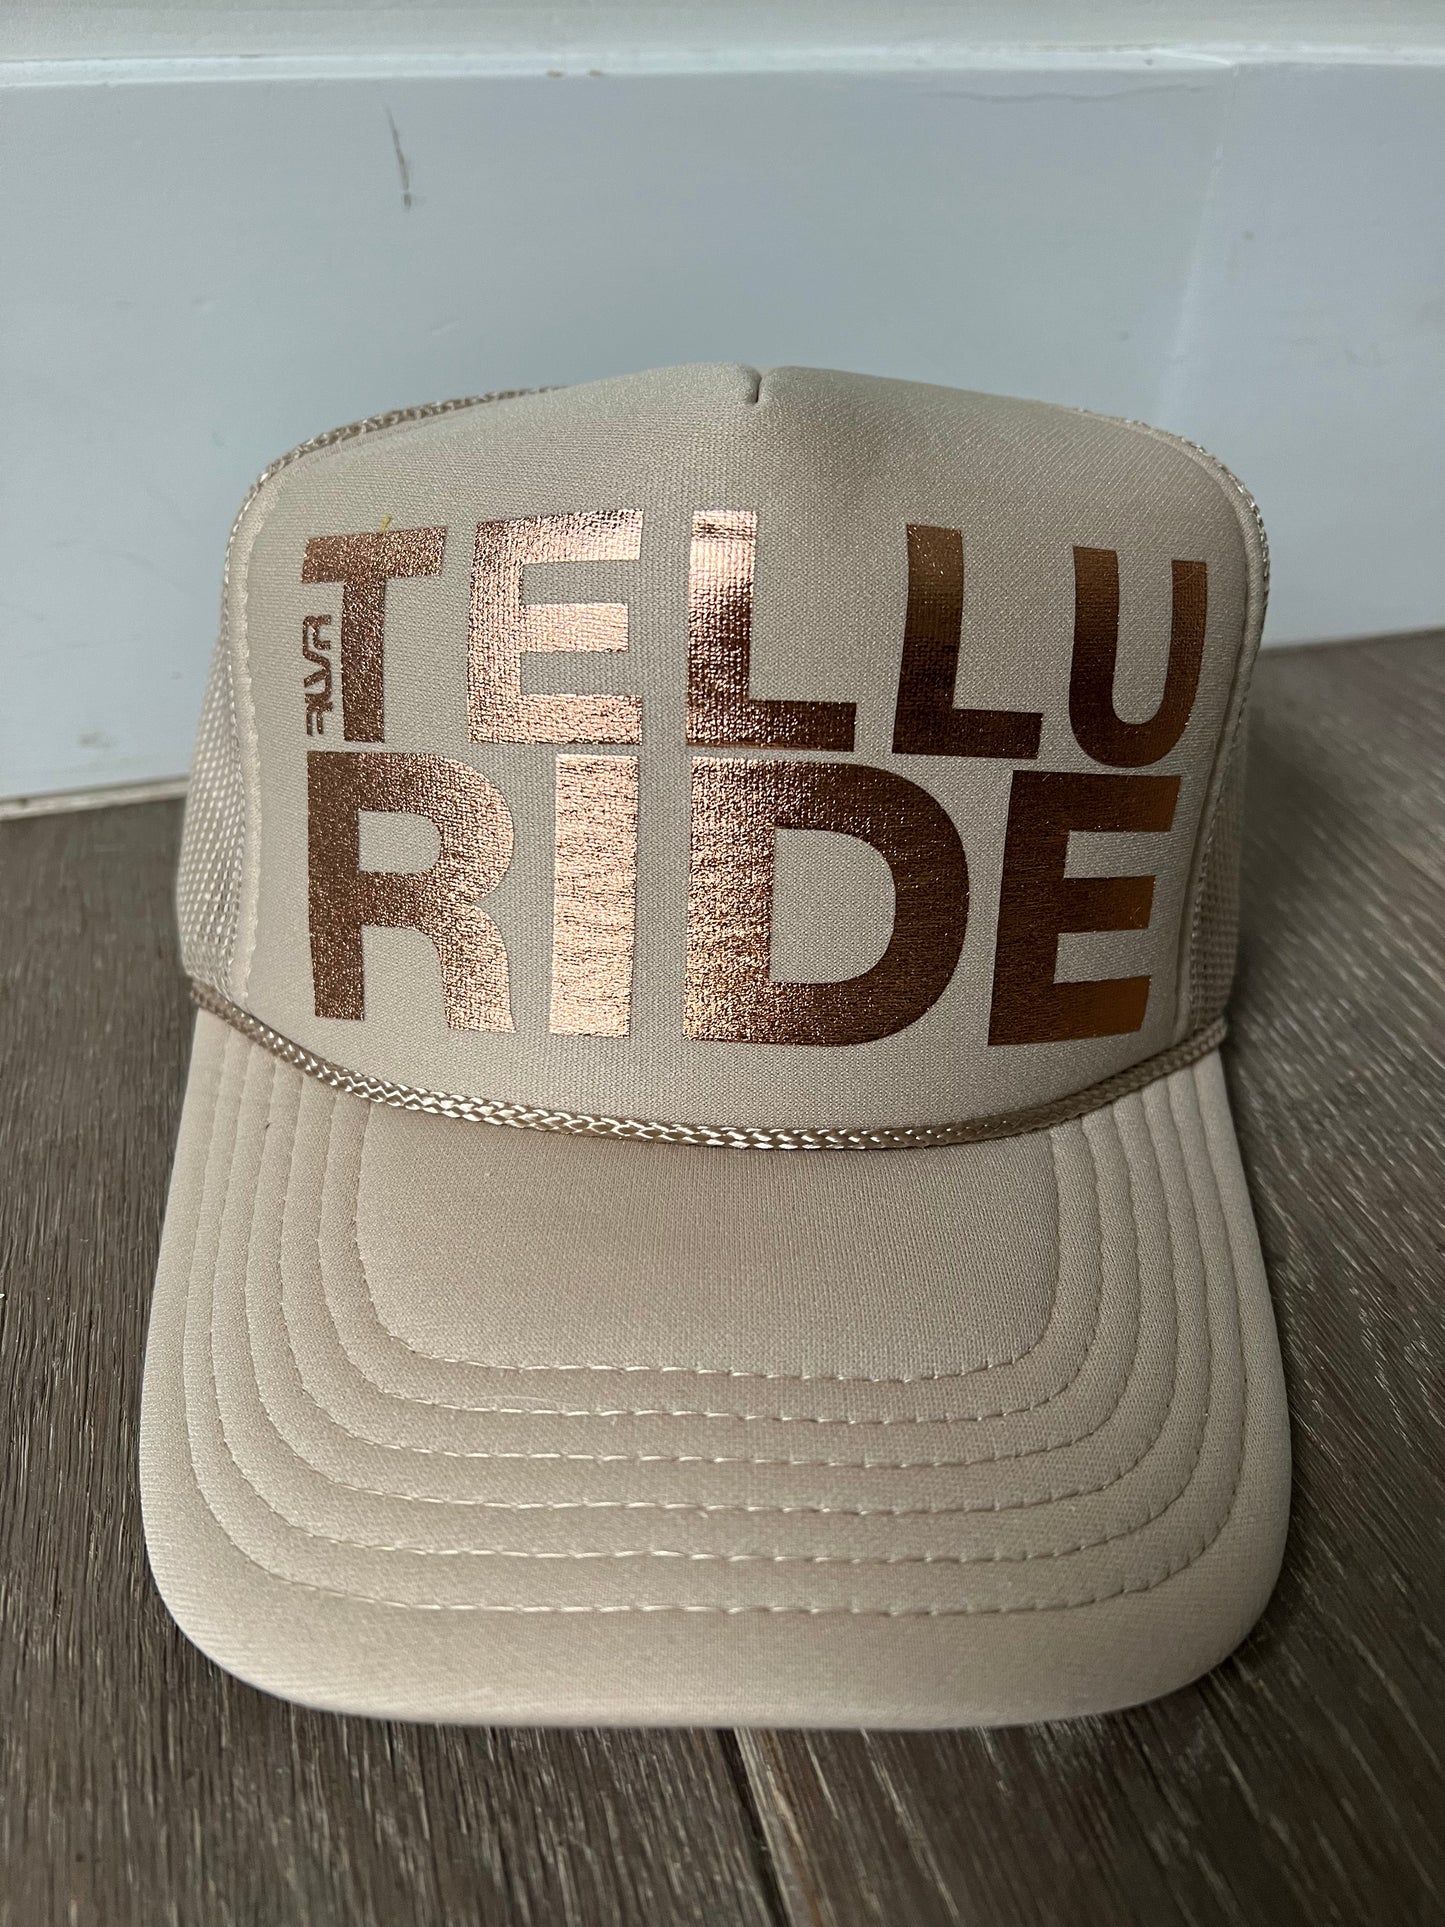 Esky TELLURIDE Hats